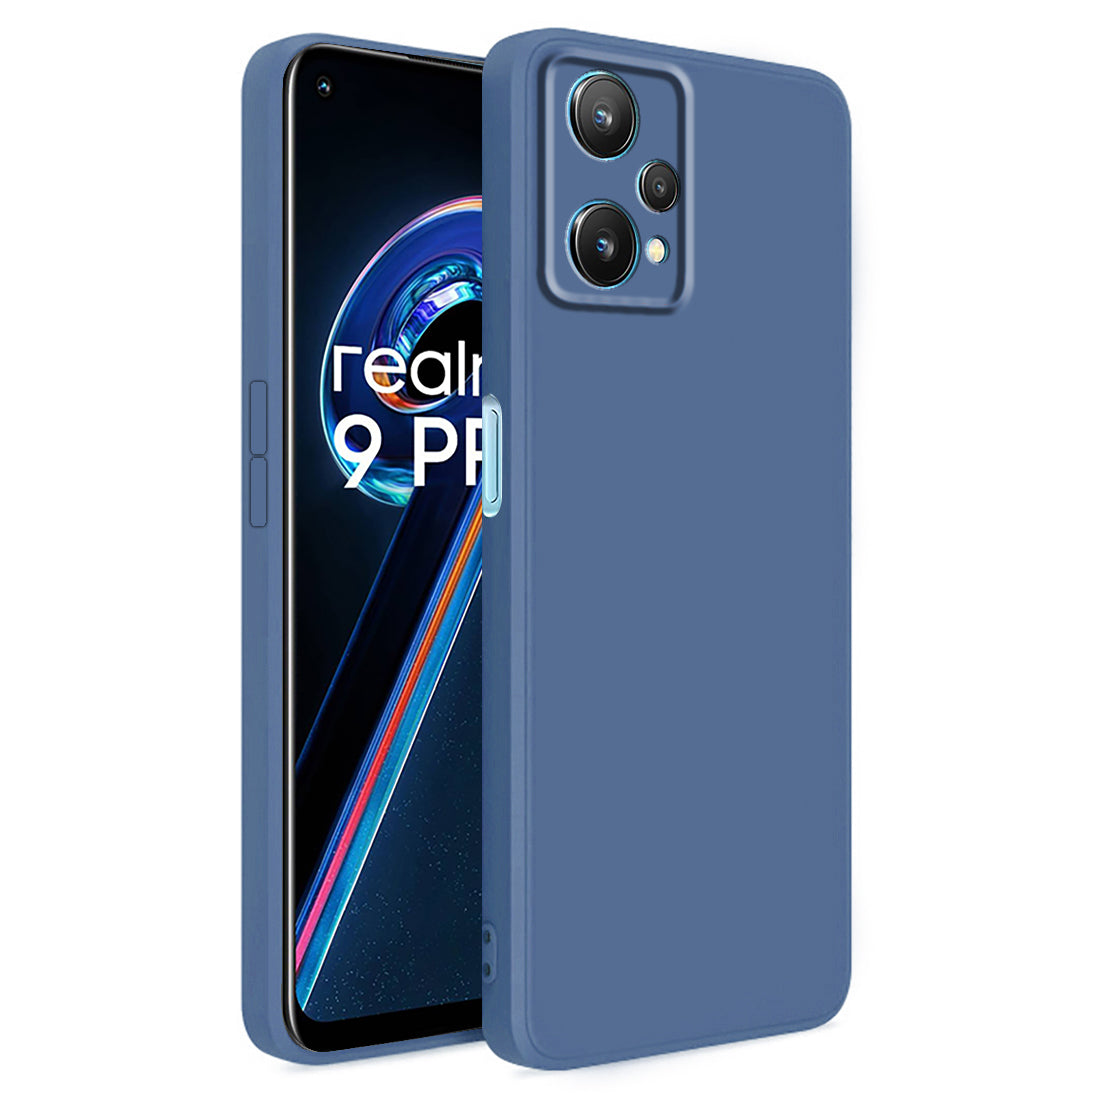 Realme 9 Pro Plus 5G